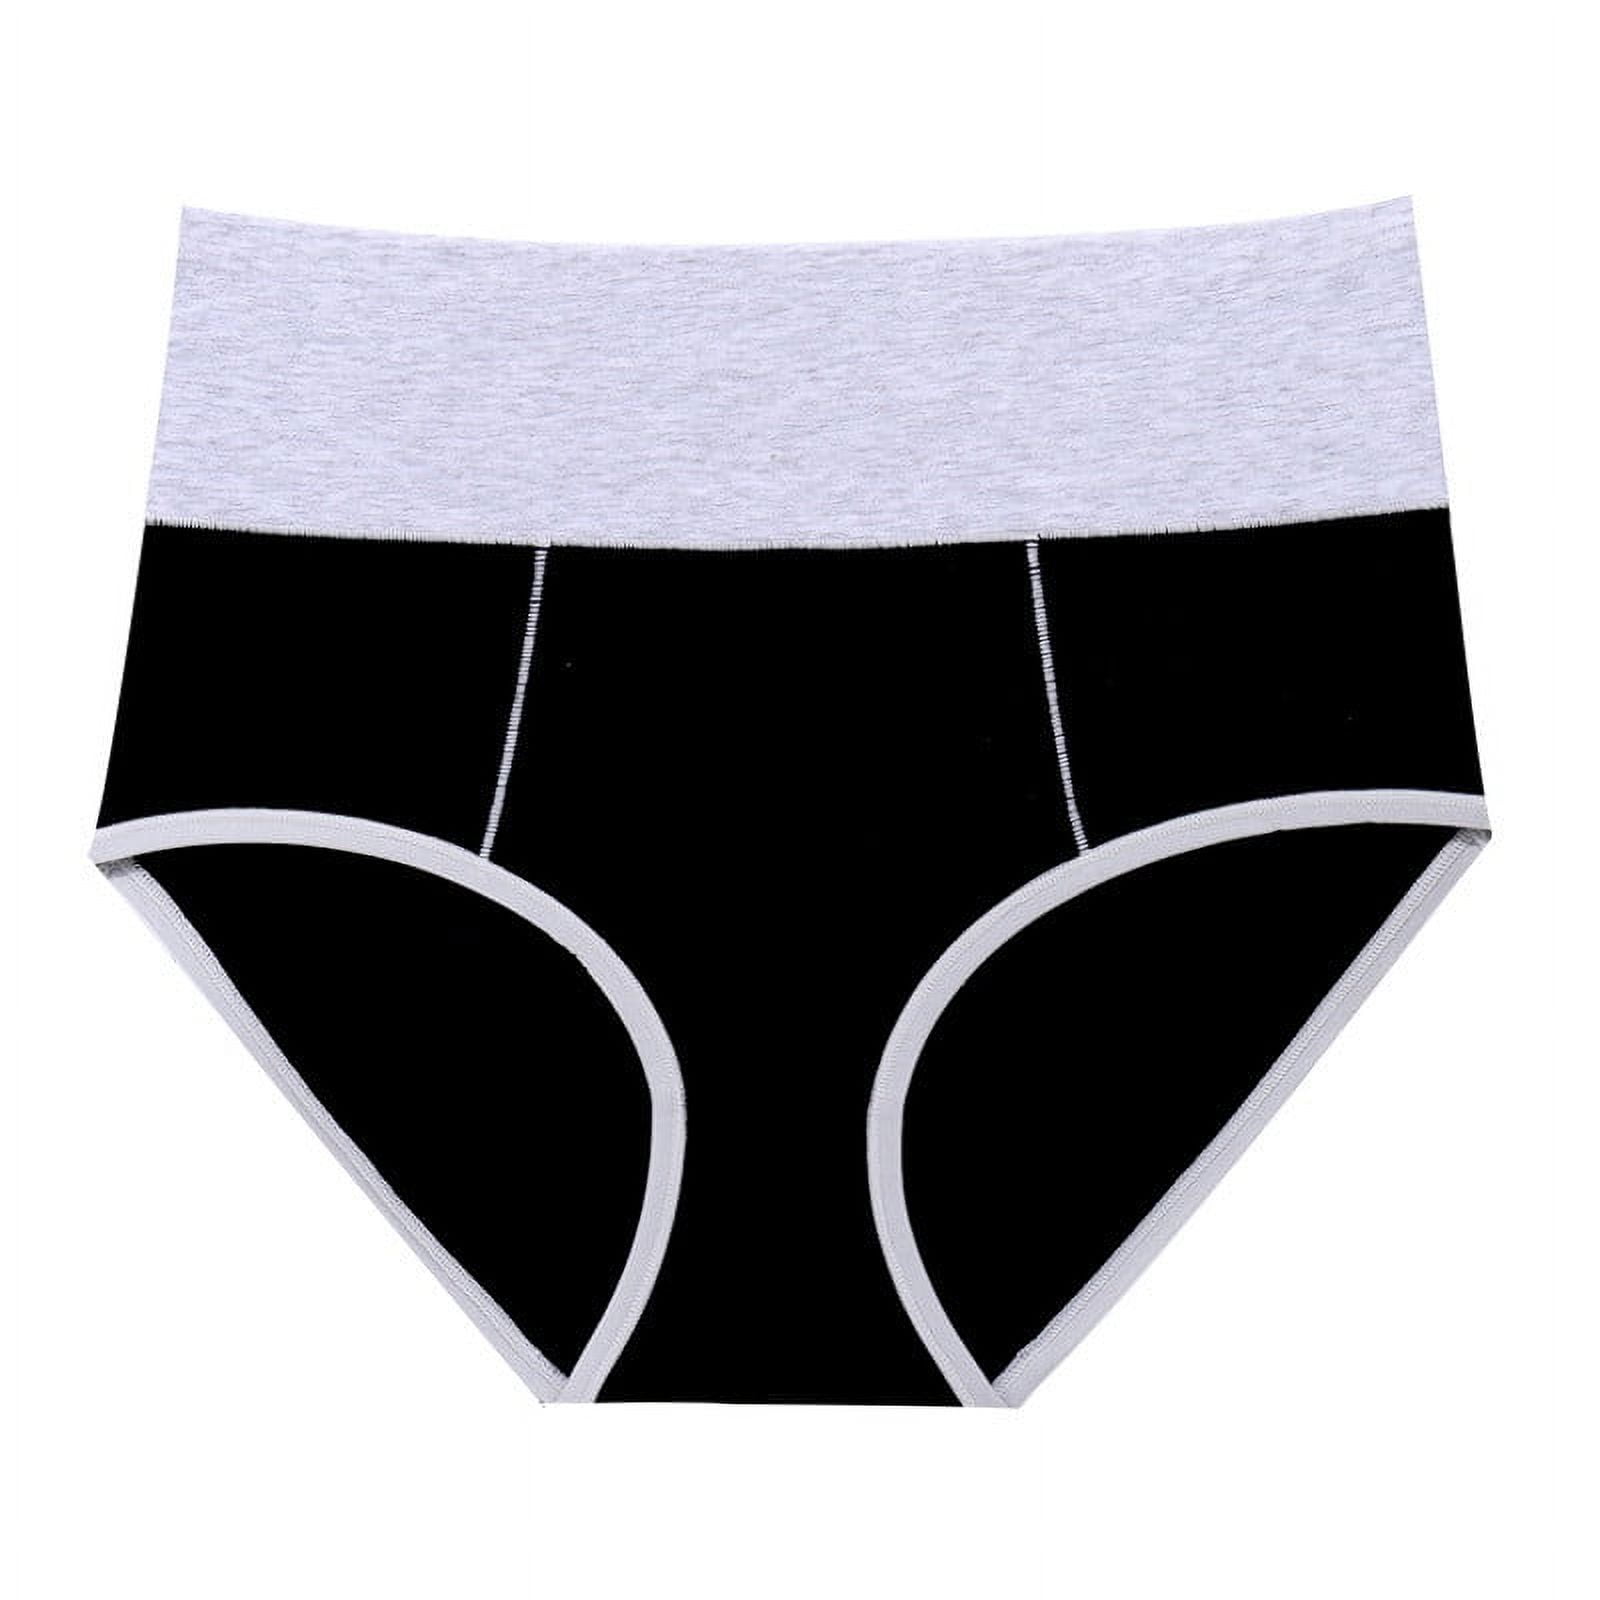 Qcmgmg Plus Size Underwear for Women Full Coverage Briefs Cotton